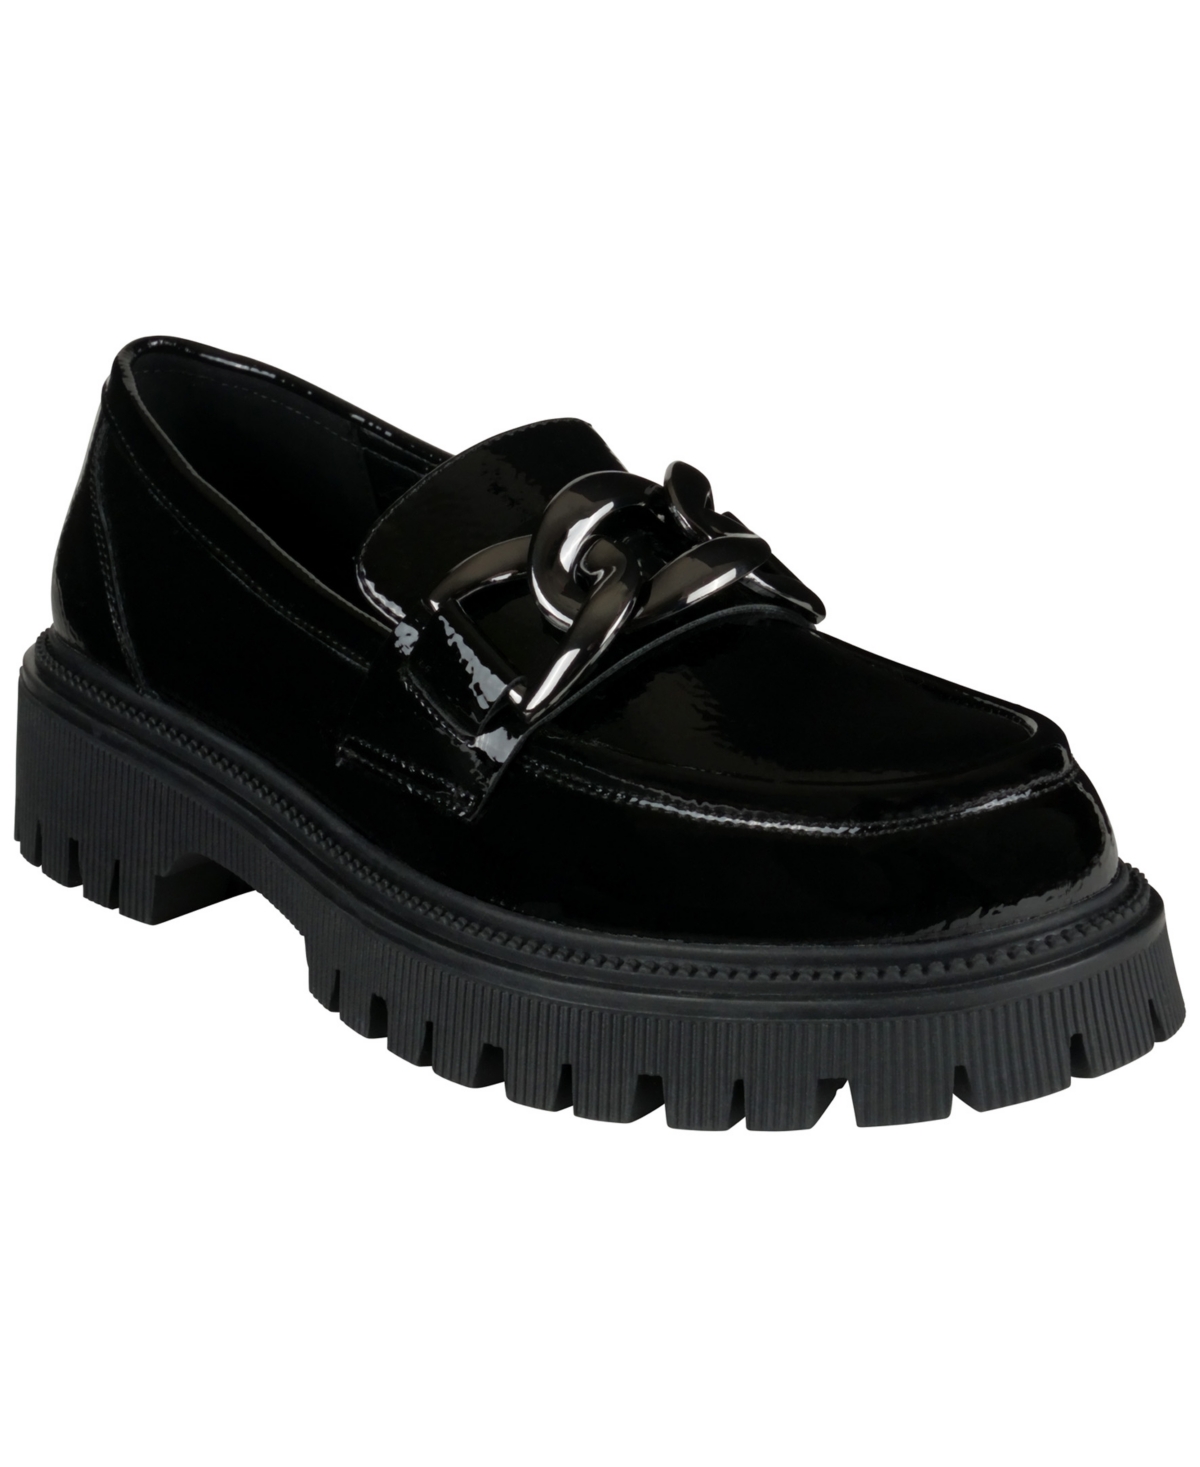 Women's Vita Slip-On Buckle Platform Loafers - Black